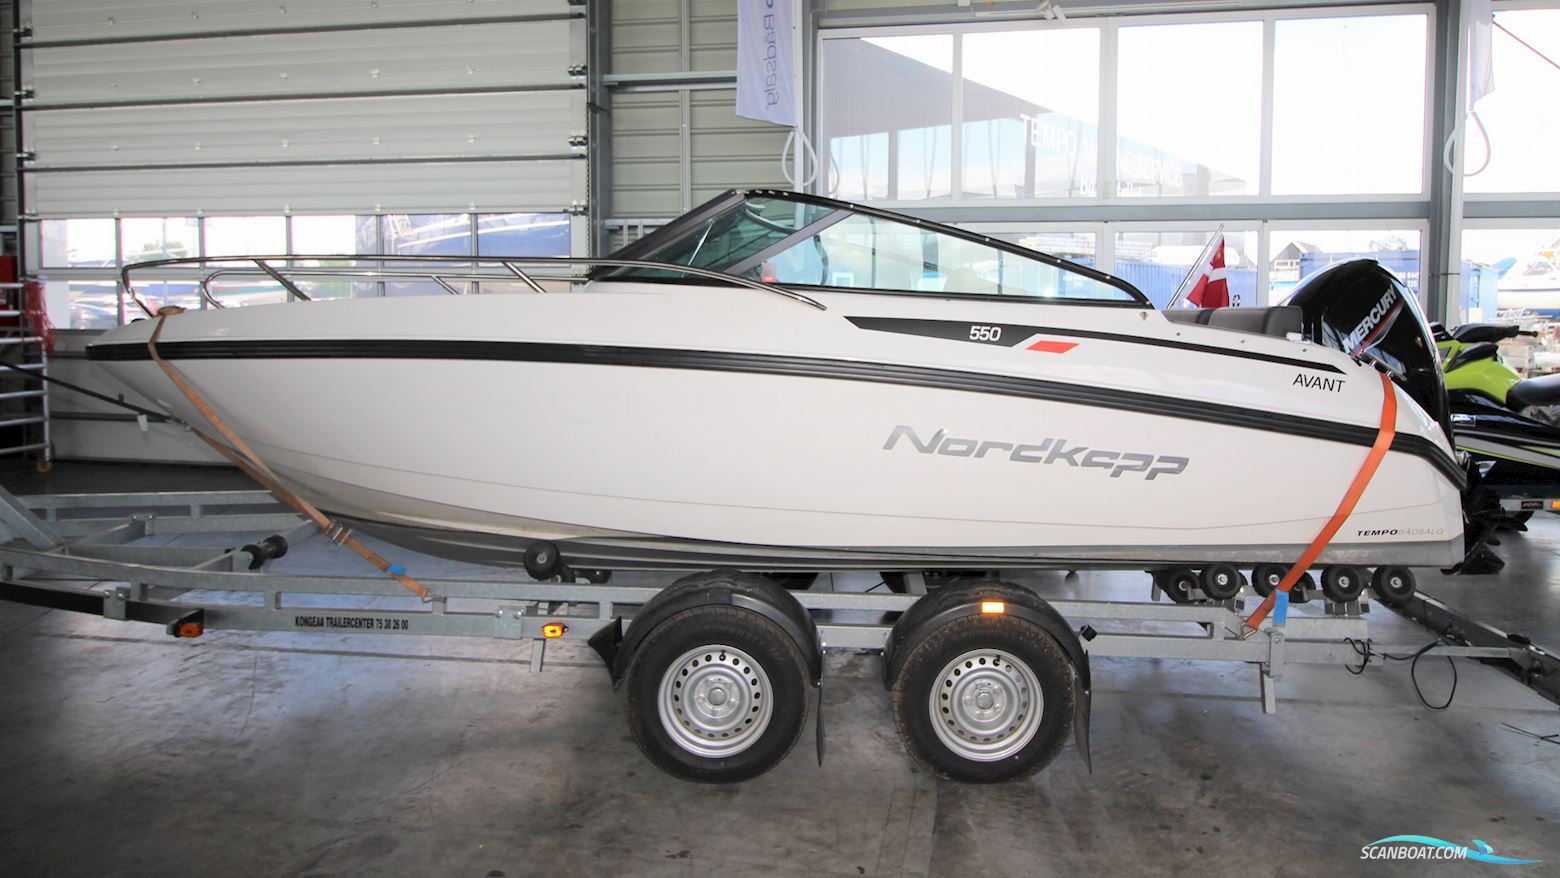 Nordkapp Avant 550 Motor boat 2019, with Mercury engine, Denmark